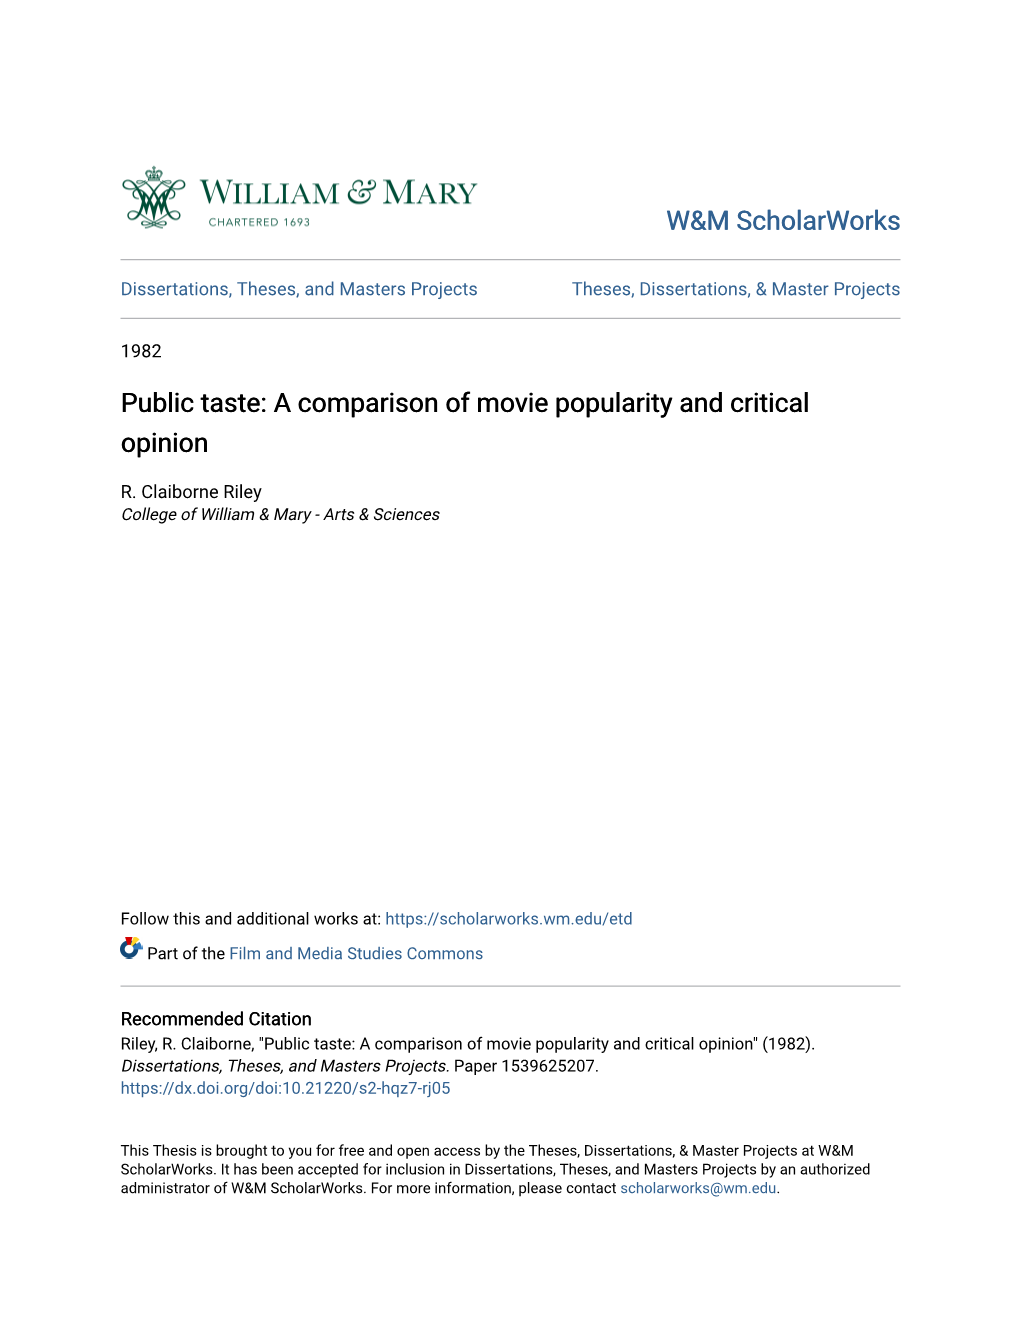 Public Taste: a Comparison of Movie Popularity and Critical Opinion